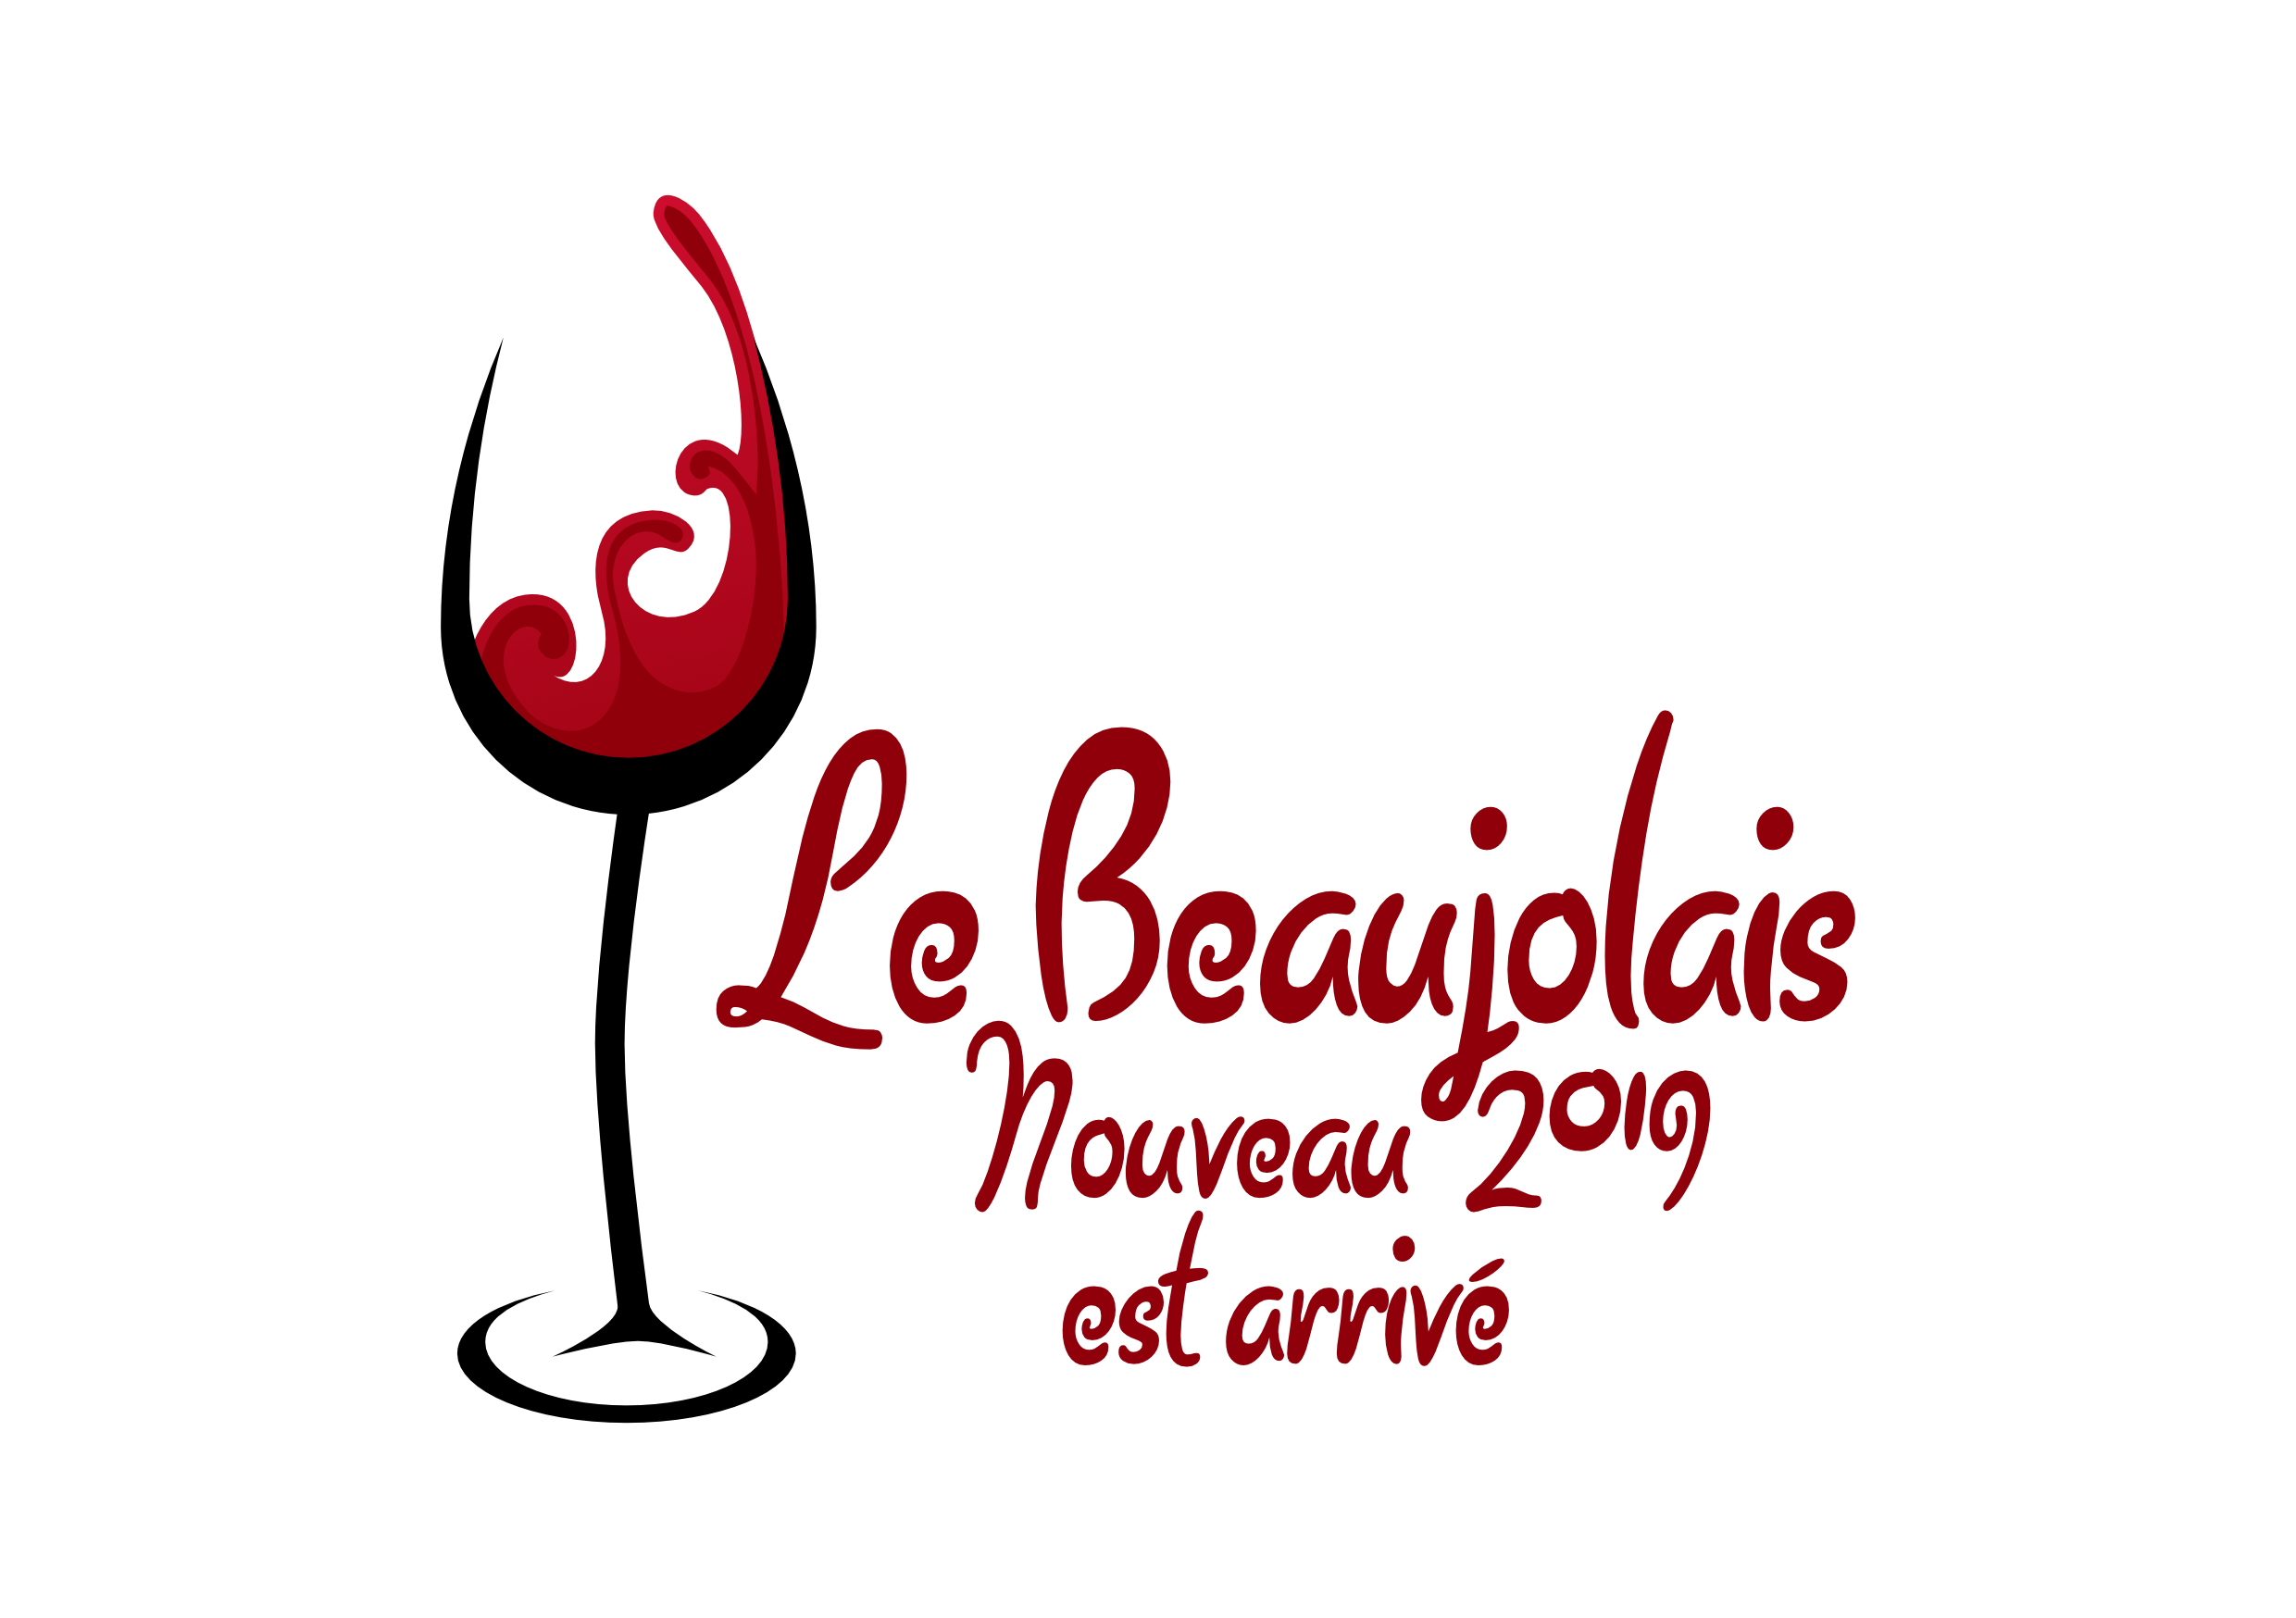 Celebrate Beaujolais Nouveau Day with The Wine Shoppe The Wine Shoppe